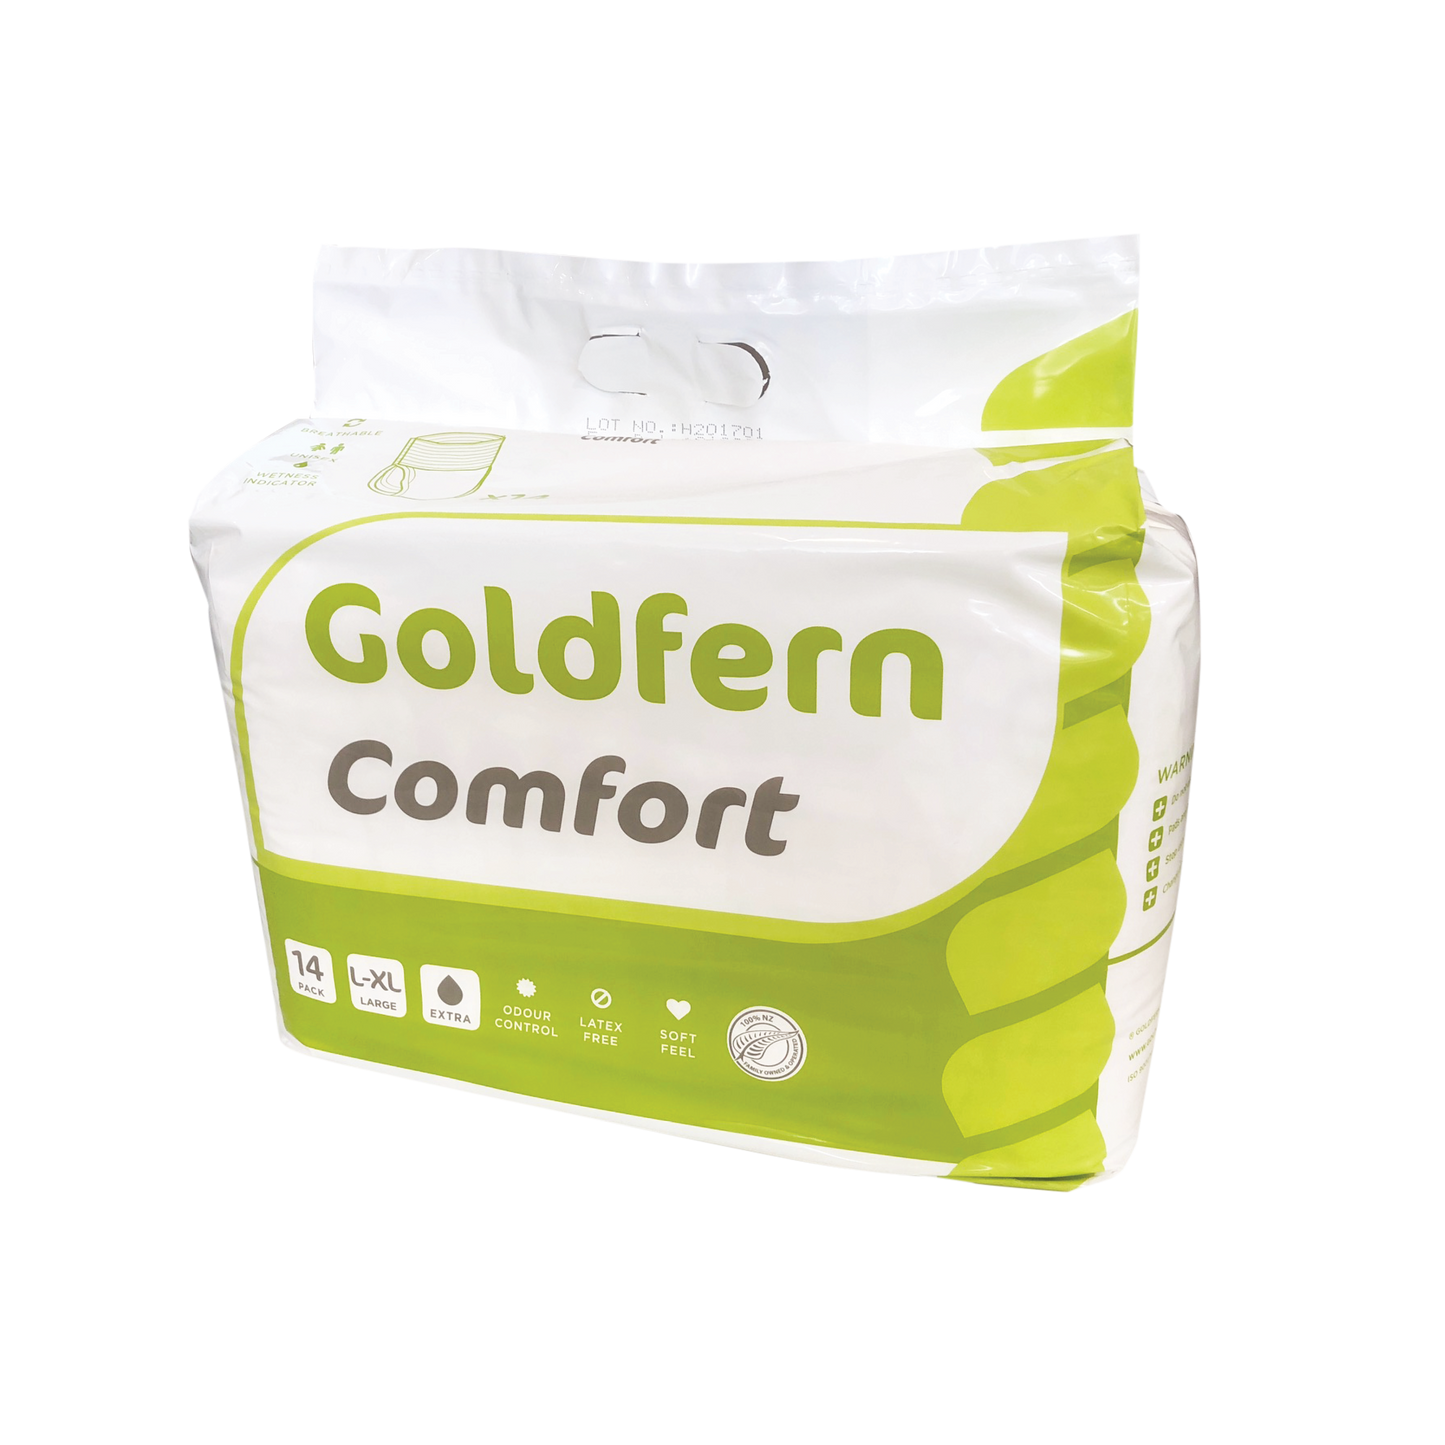 Goldfern Comfort Pull-ons